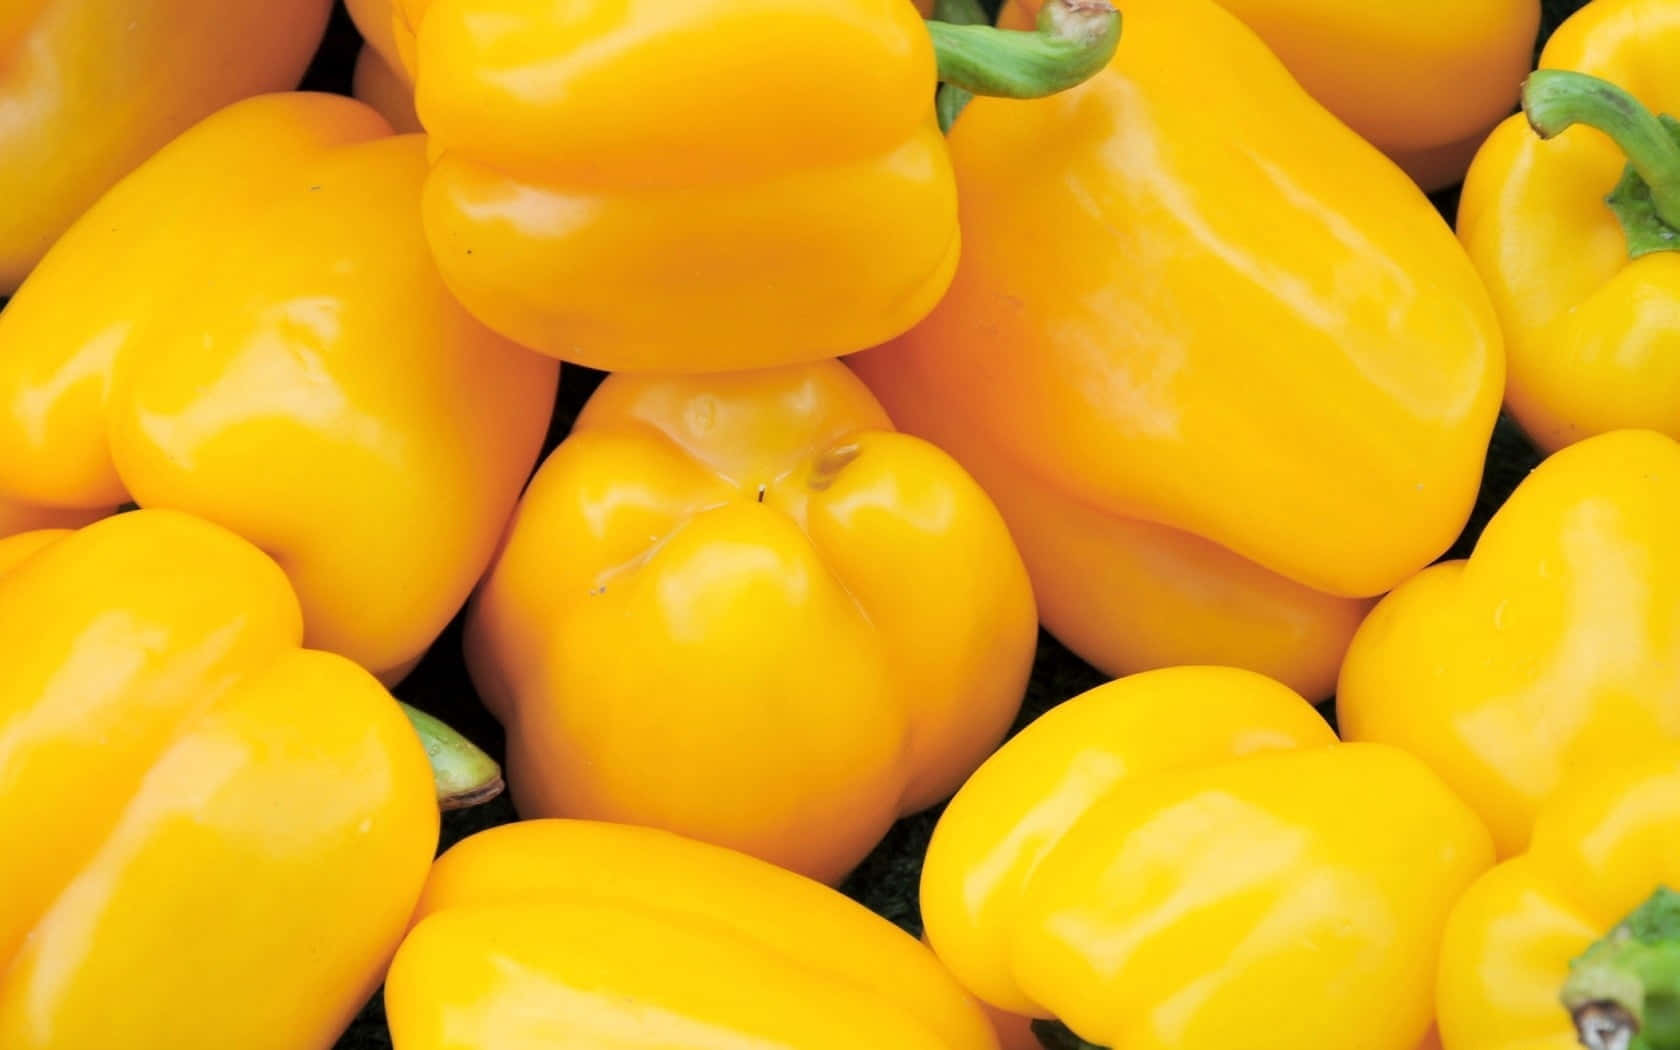 Vibrant Yellow Bell Pepper Close-Up Wallpaper